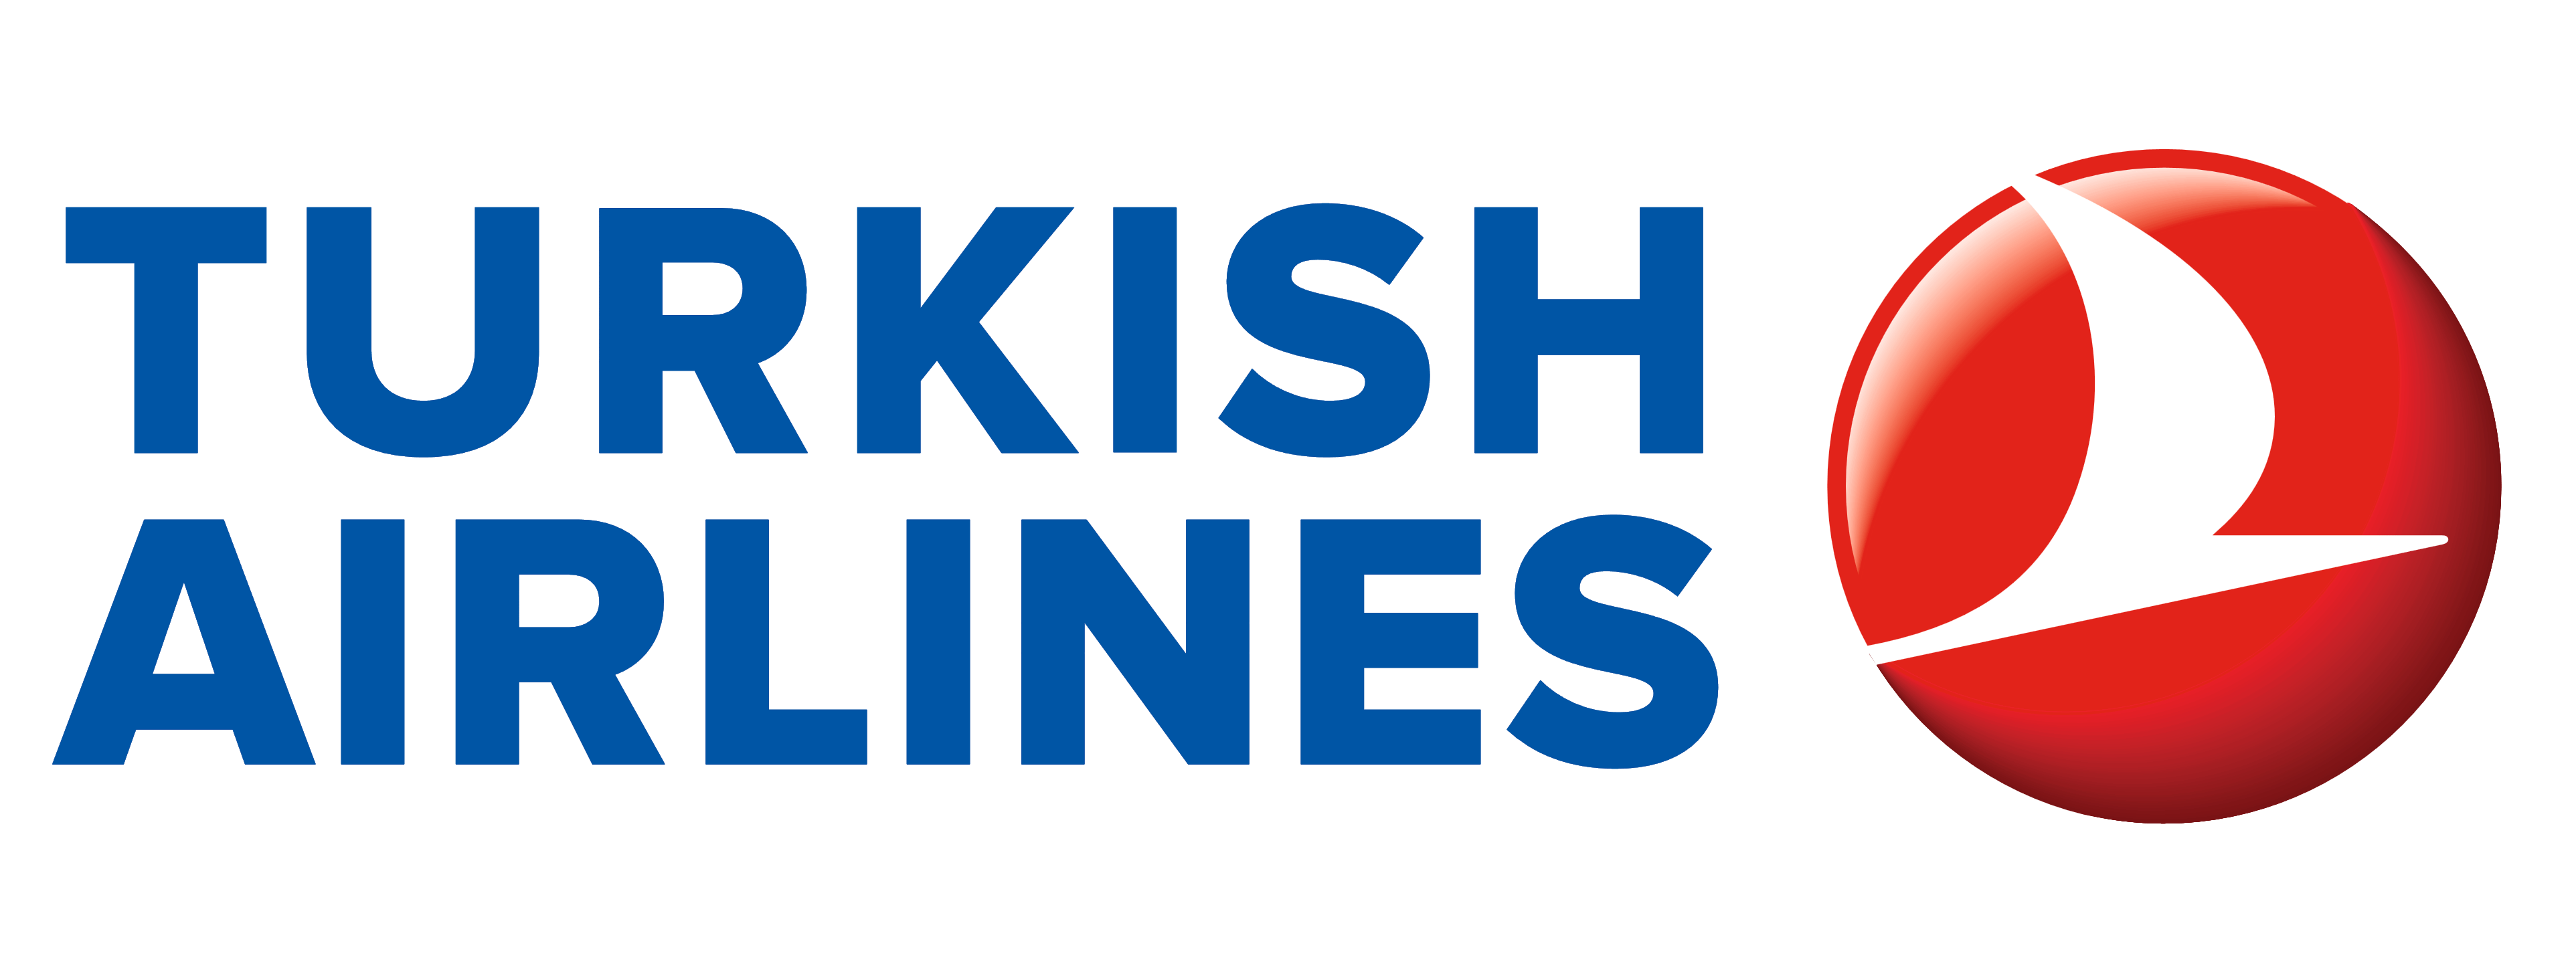 Turkish Airlines Logo Transpa